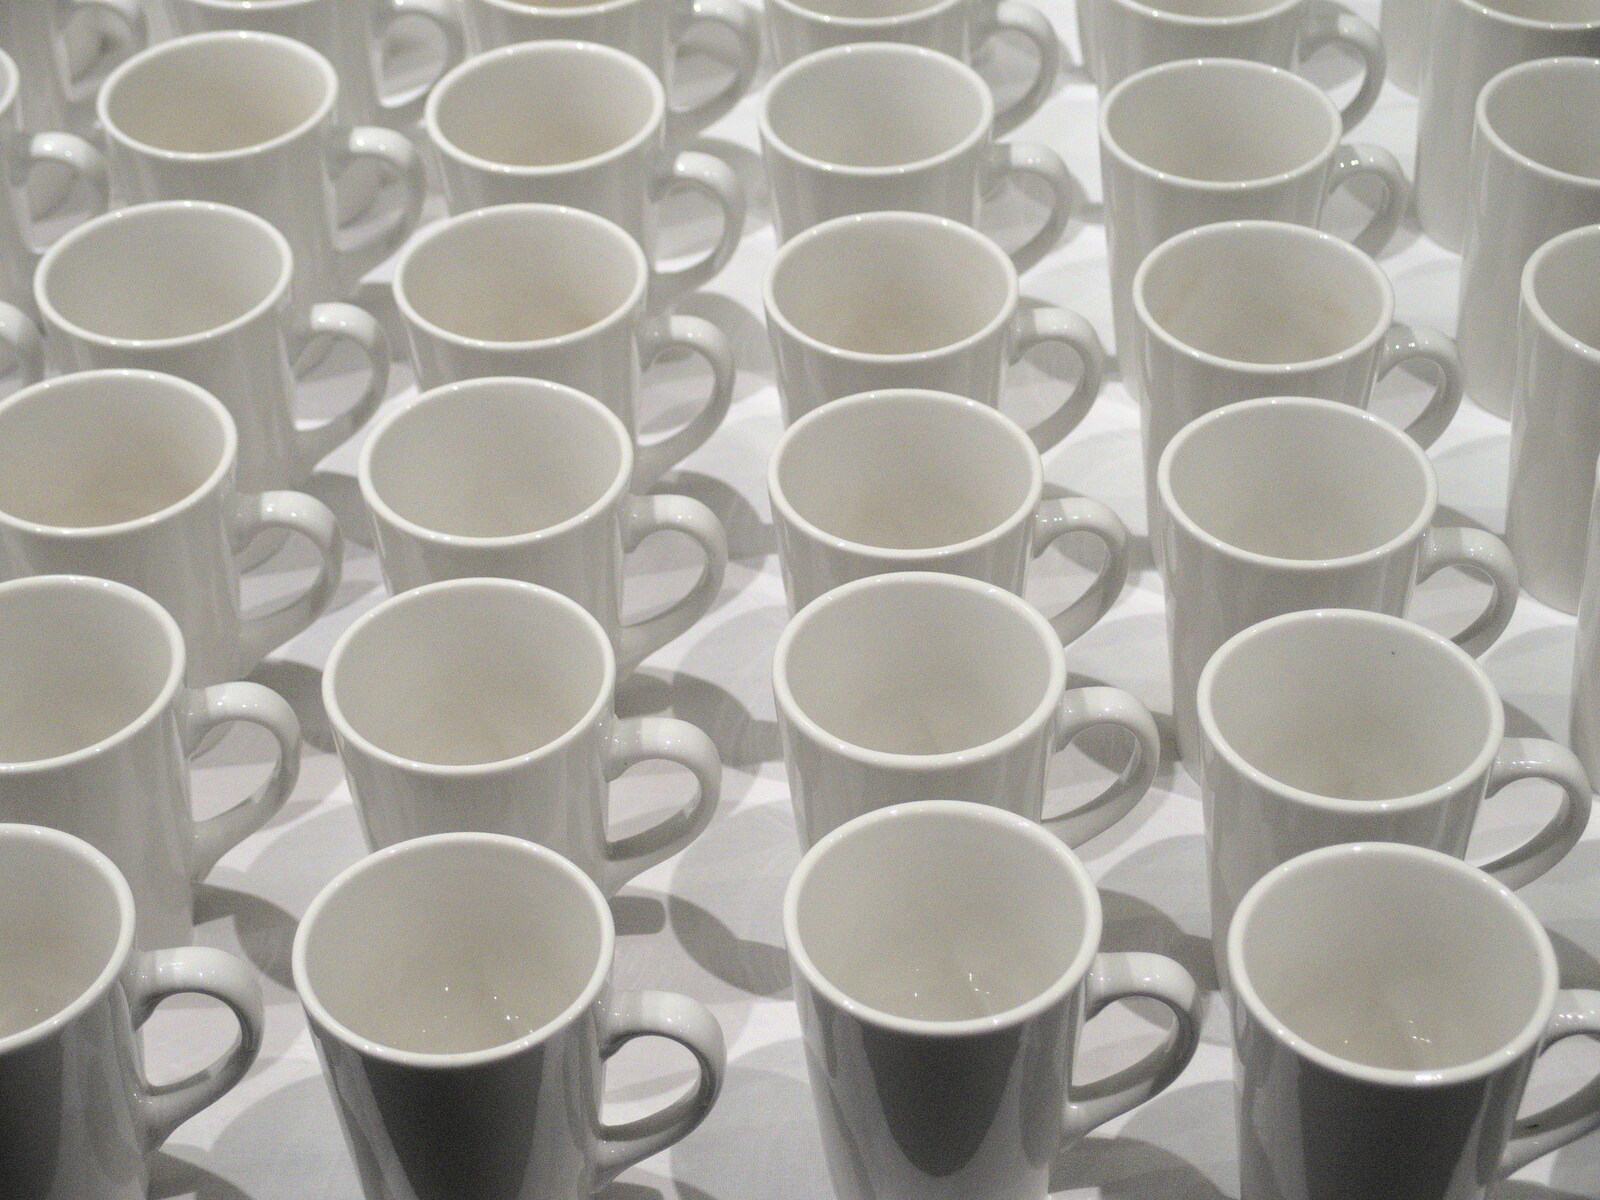 A million china mugs from The BBs at Centre Parcs, Elvedon, Norfolk - 5th November 2015